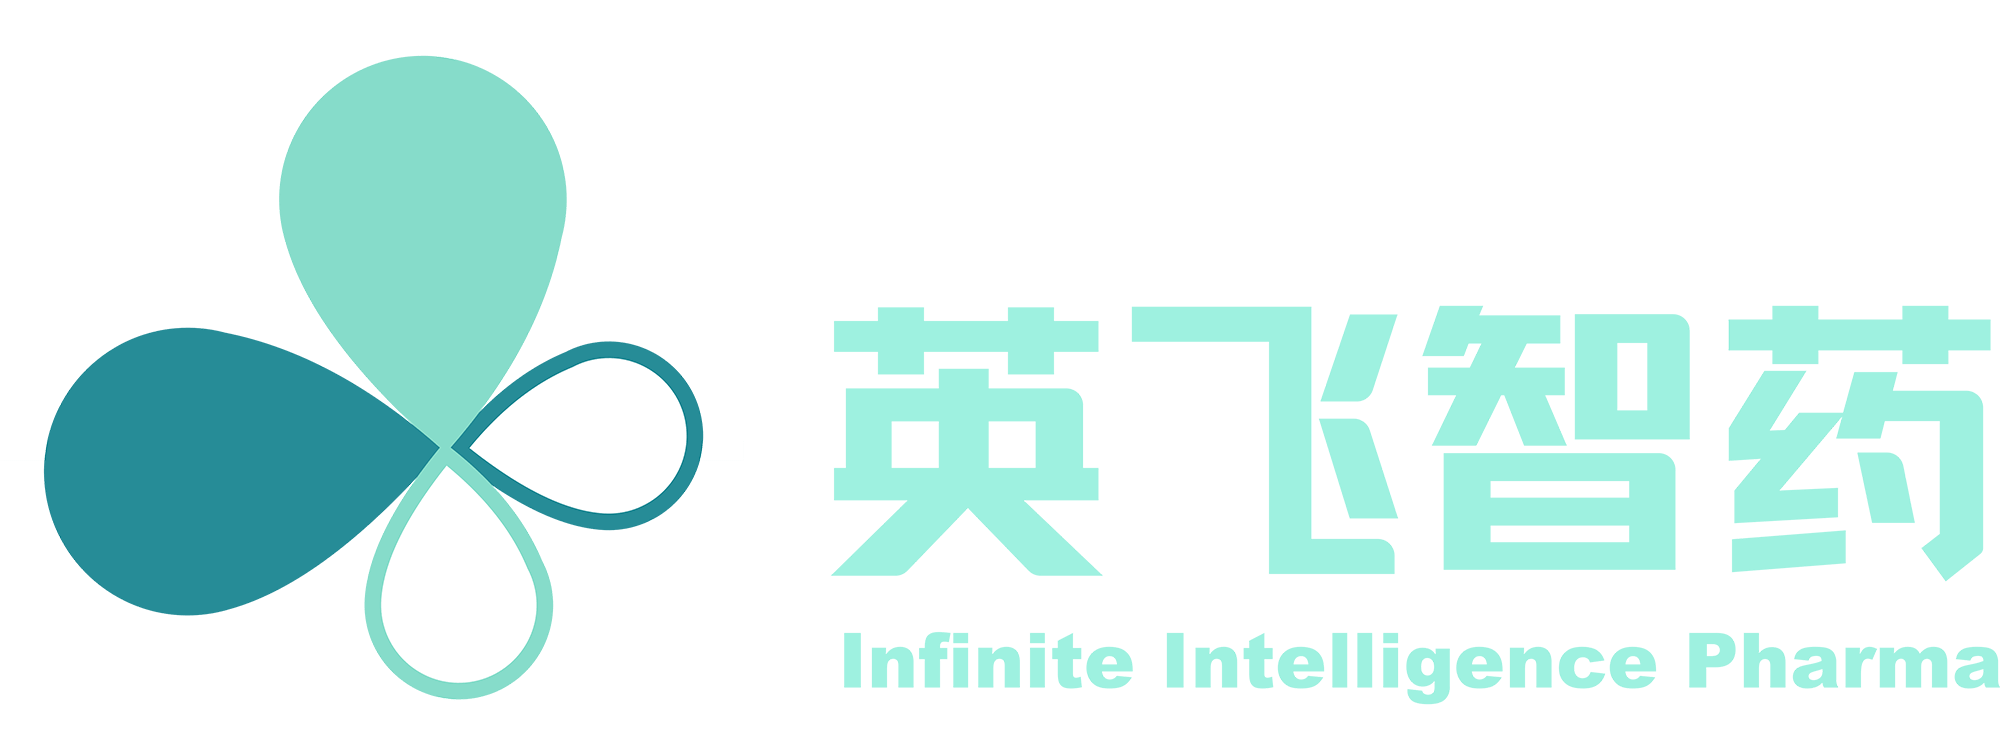 Infinite Intelligence Pharma logo